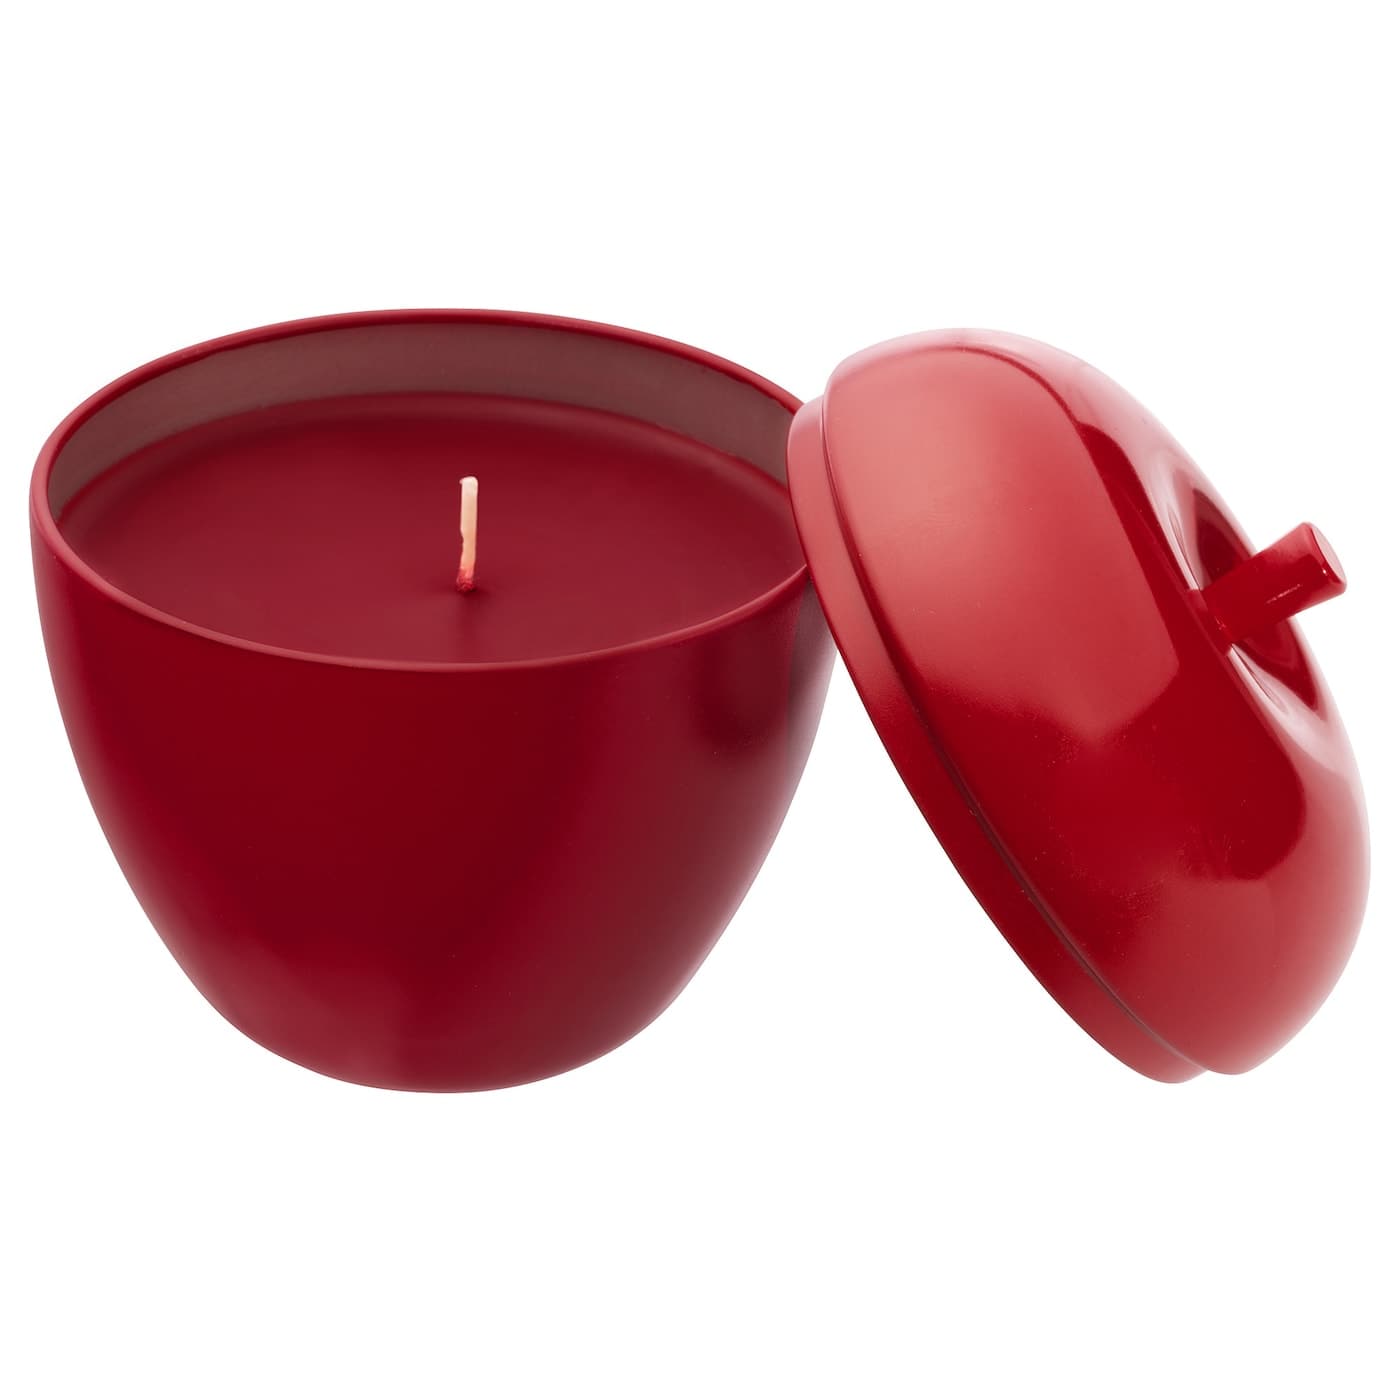 VINTER 2021 Scented candle/metal jar - apple-shaped/winter apples red 9 cm